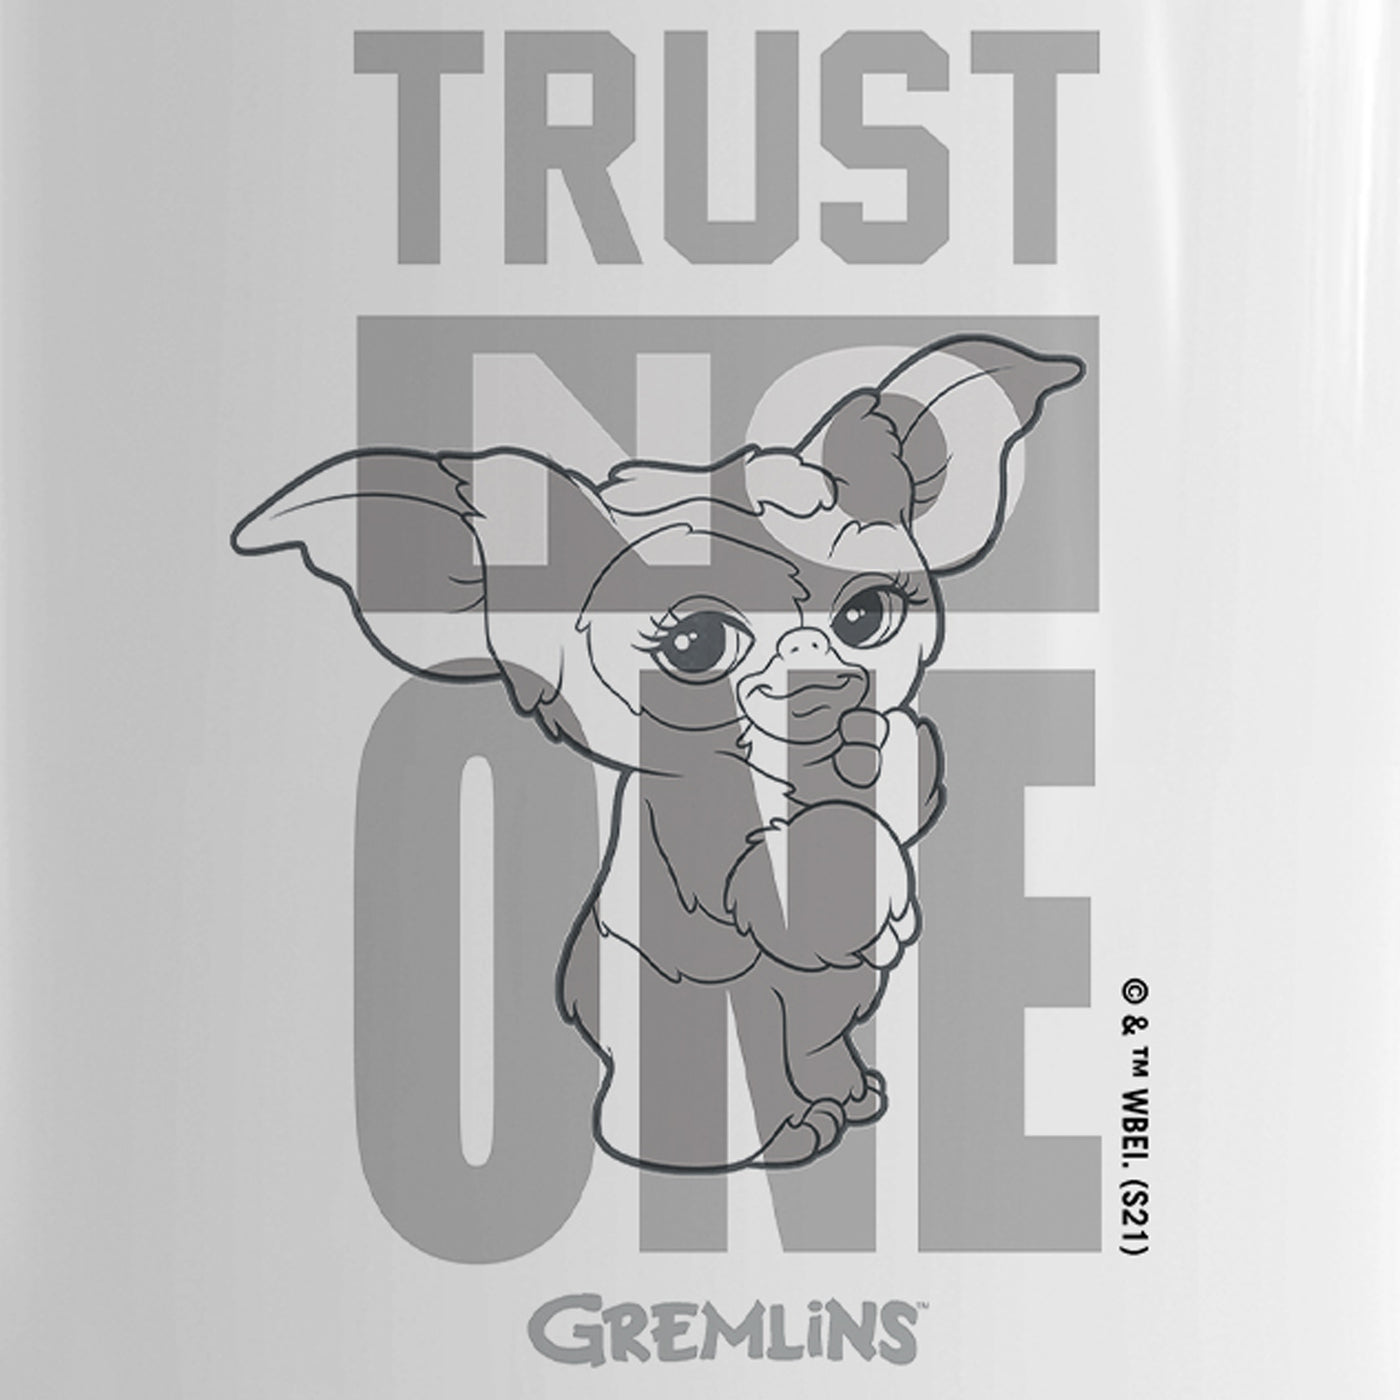 Gremlins Trust No One White Mug